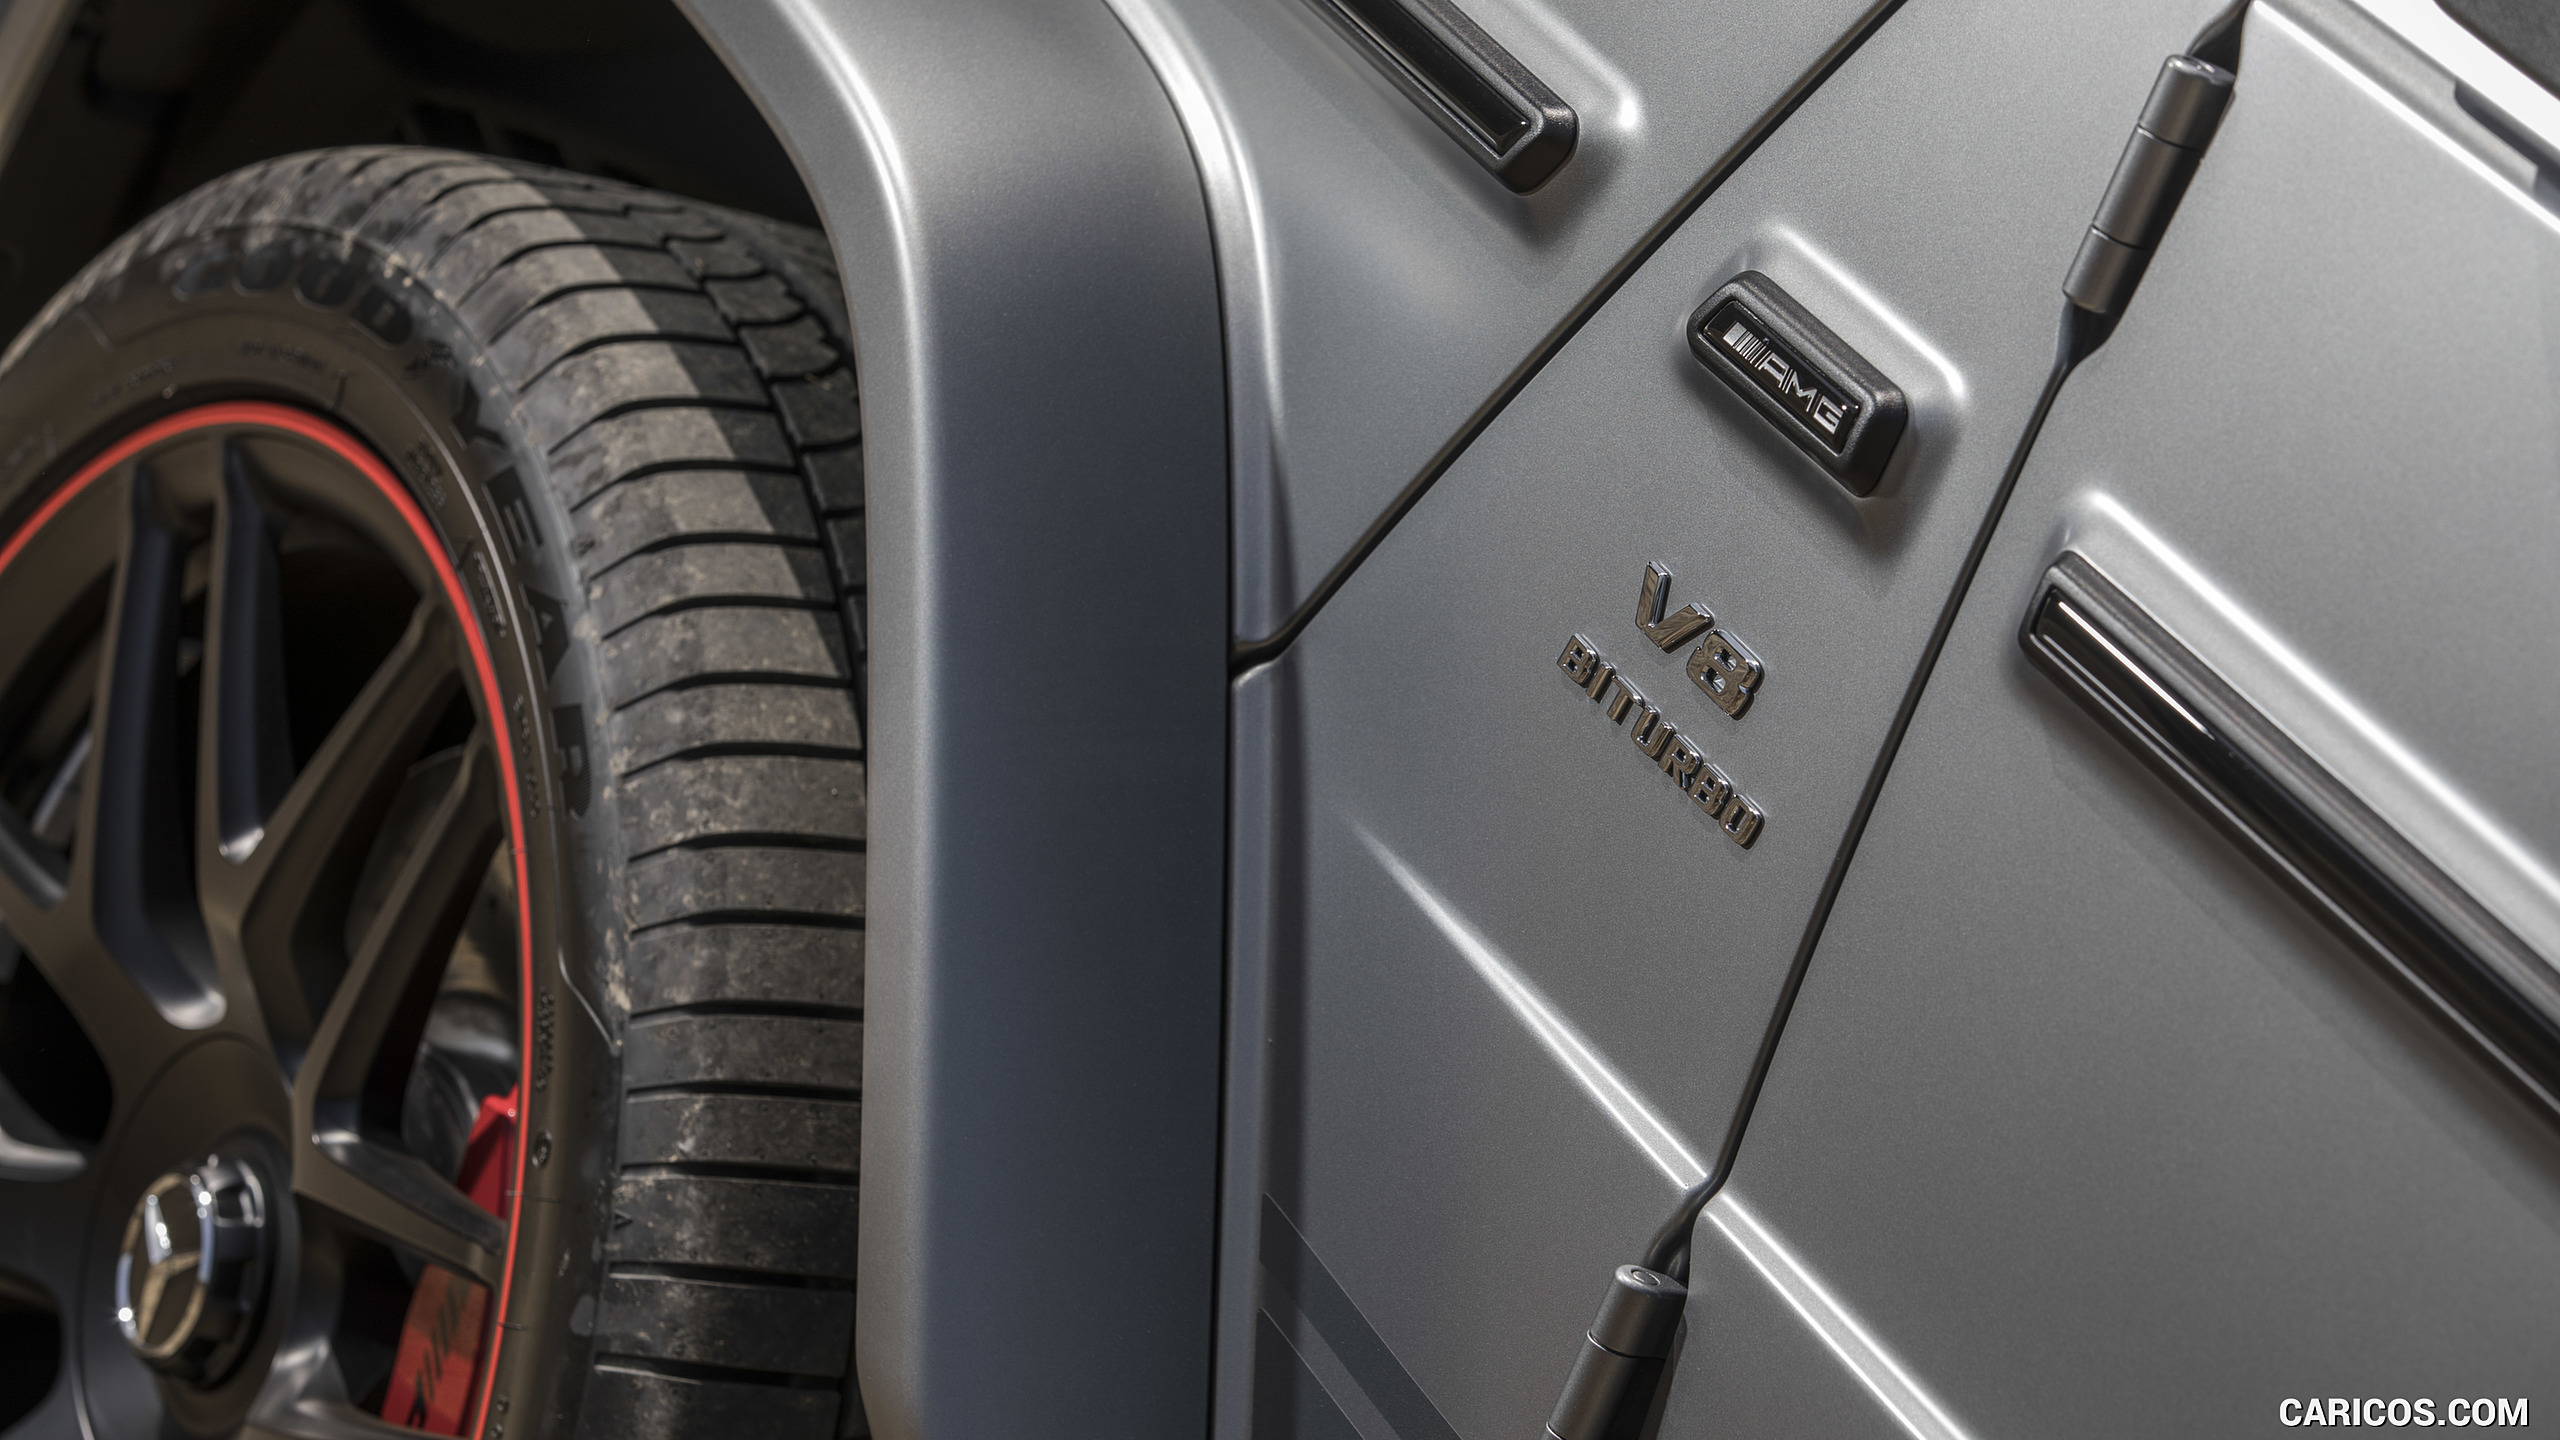 2019 Mercedes-AMG G63 - Detail, #174 of 452